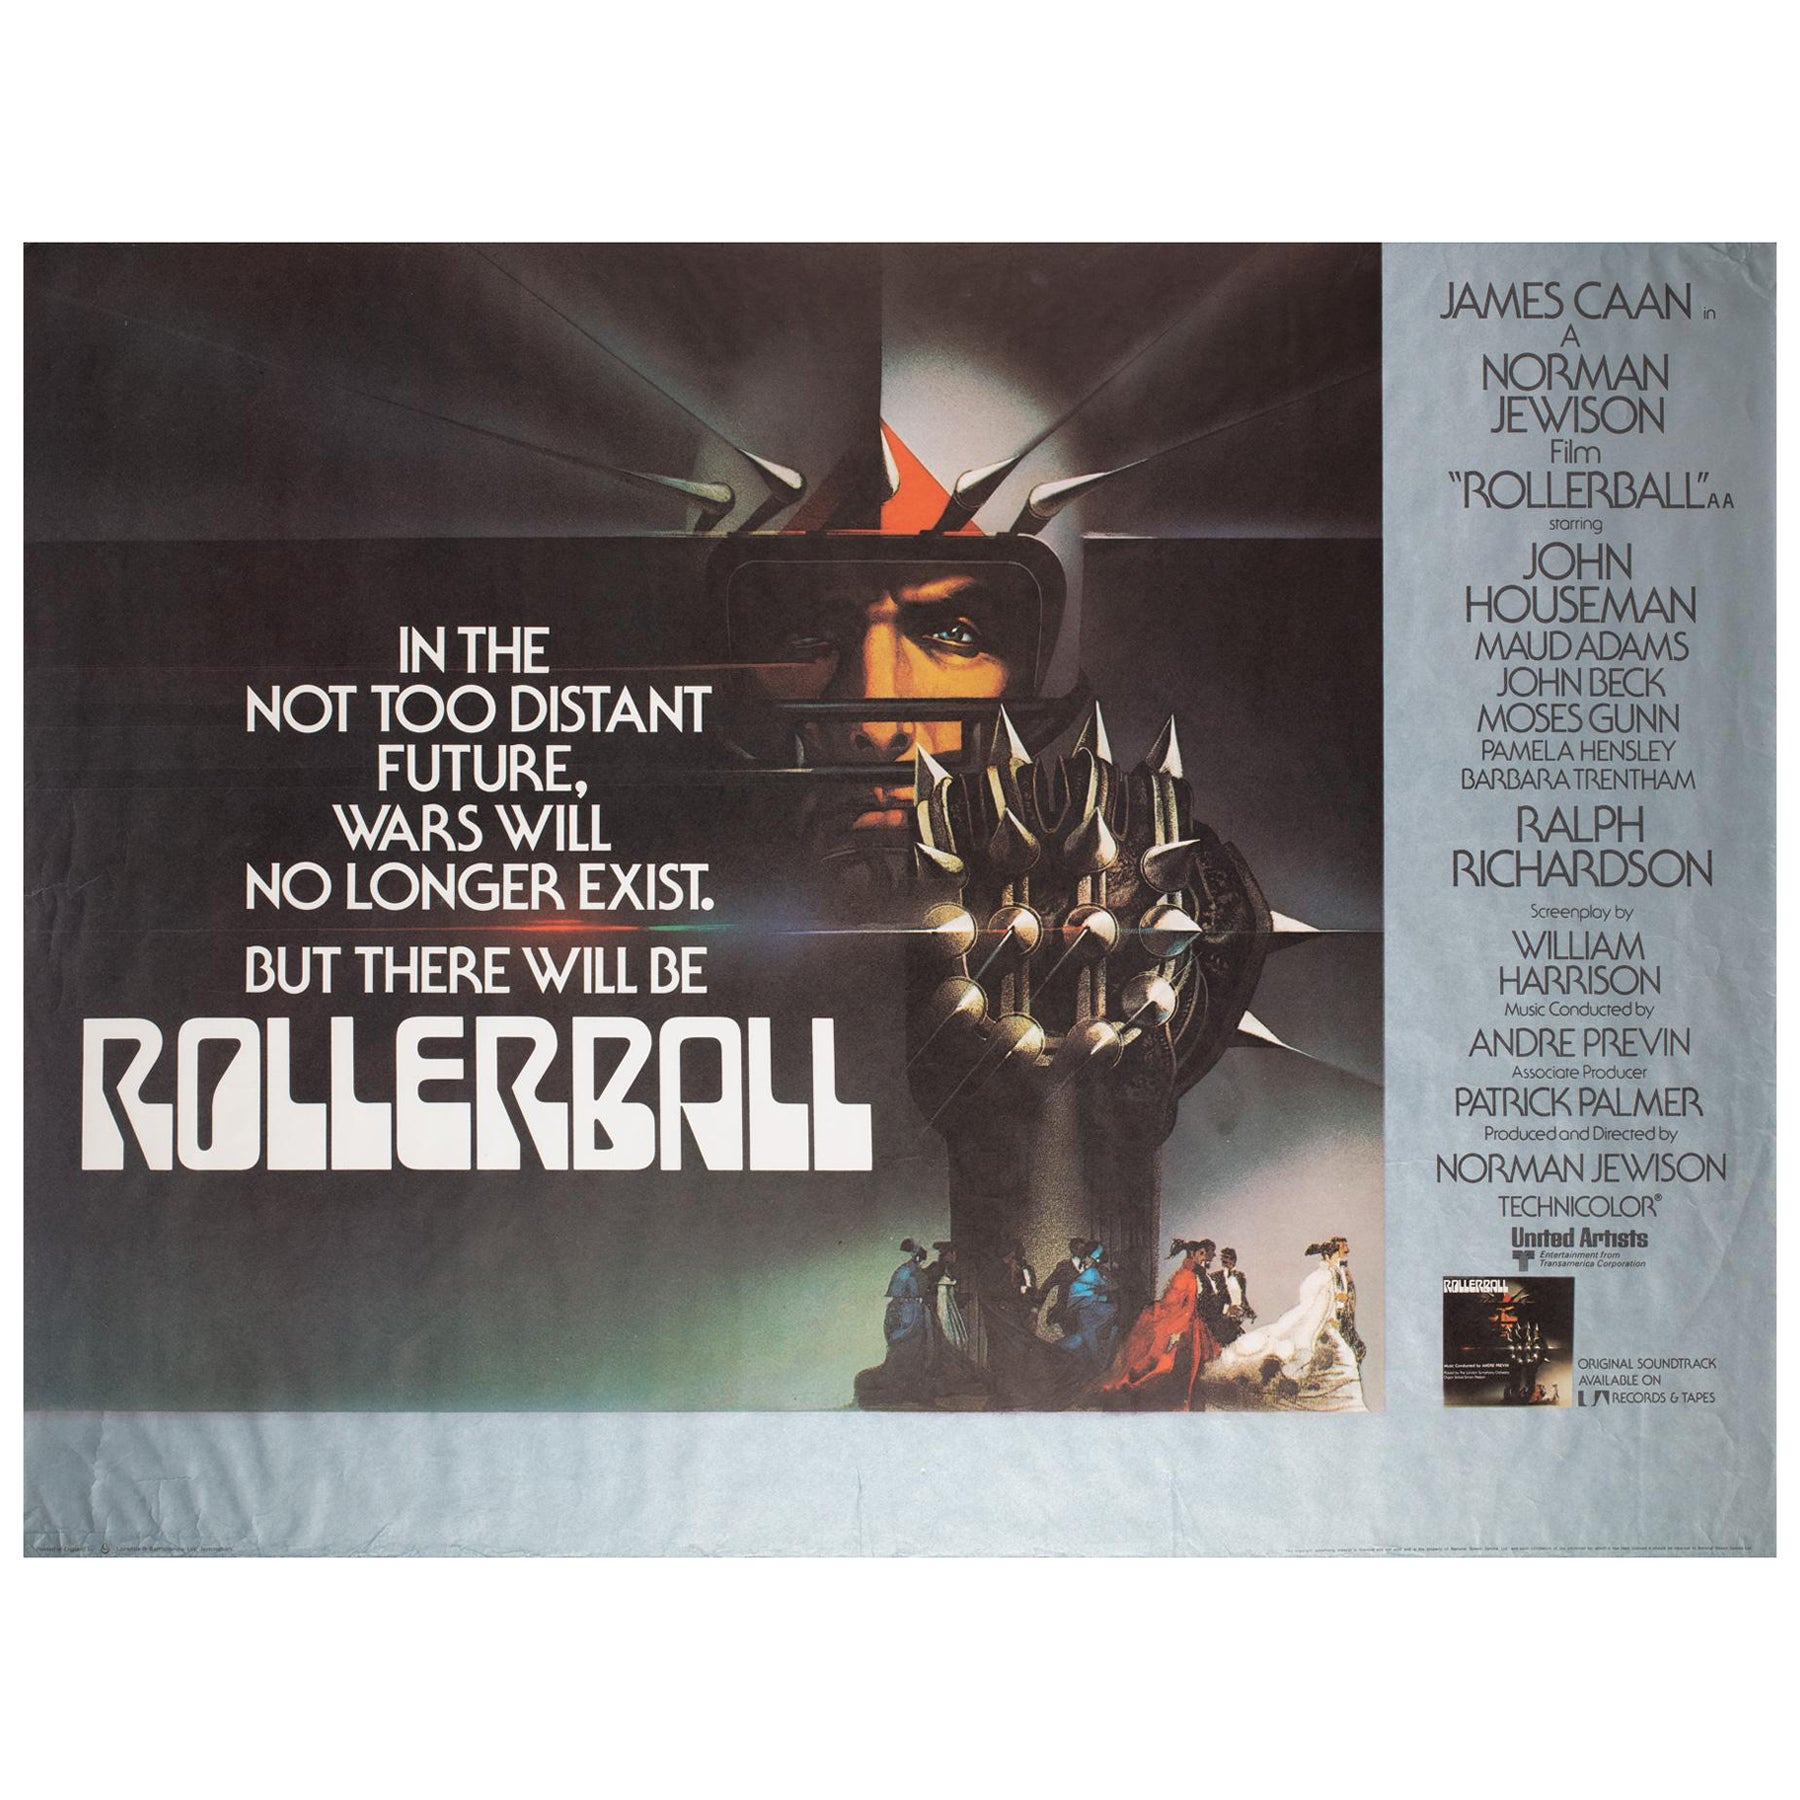 Rollerball 1975 Rolled UK Quad Film Poster, Bob Peak For Sale